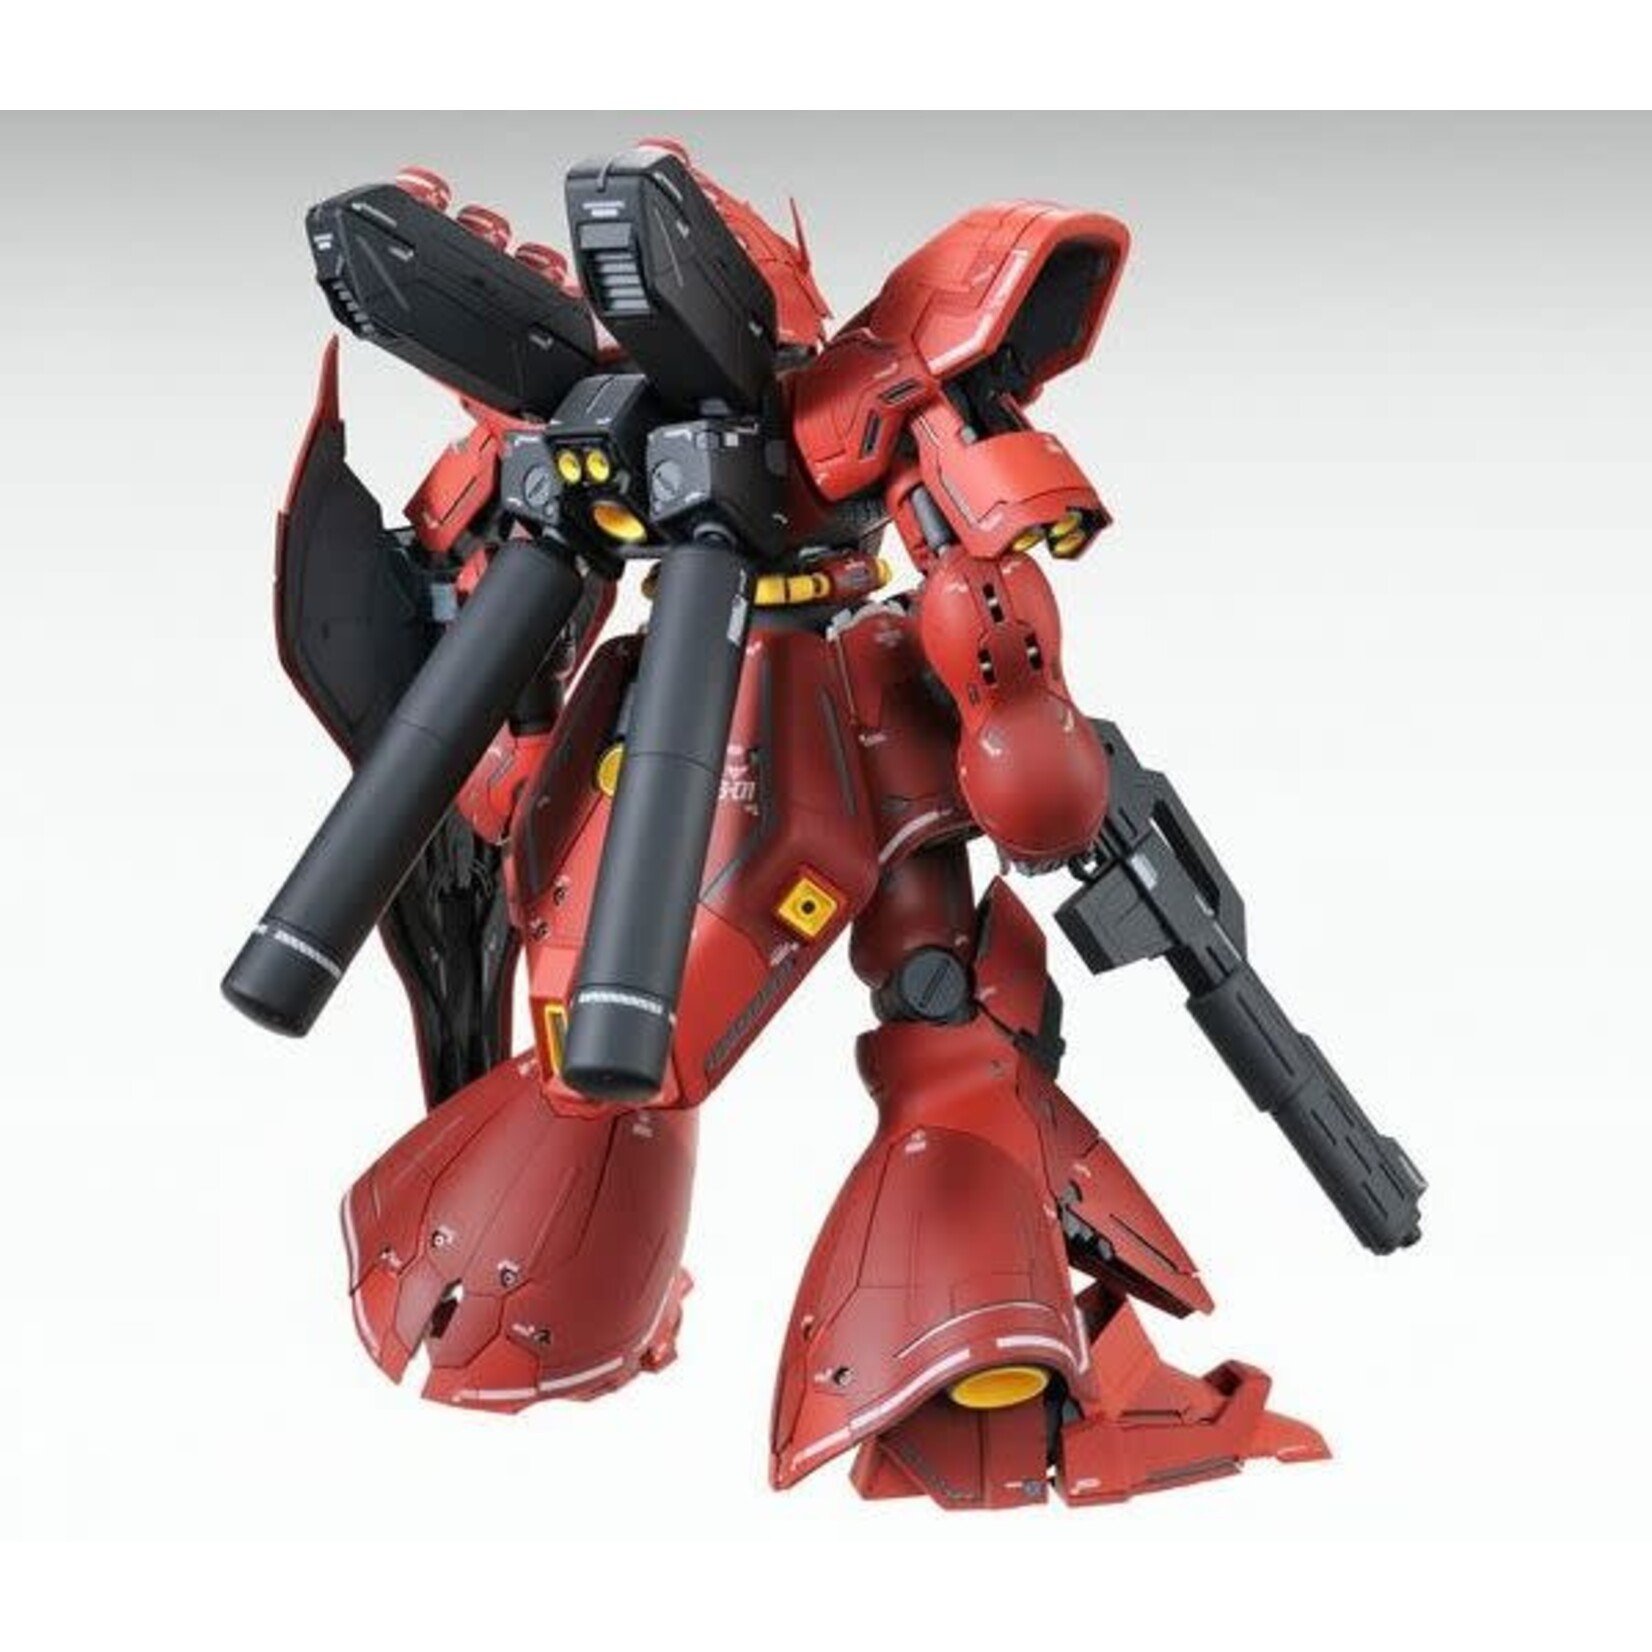 Sazabi Gundam Ver.Ka MG 1/100 Model Kit - Toy Joy